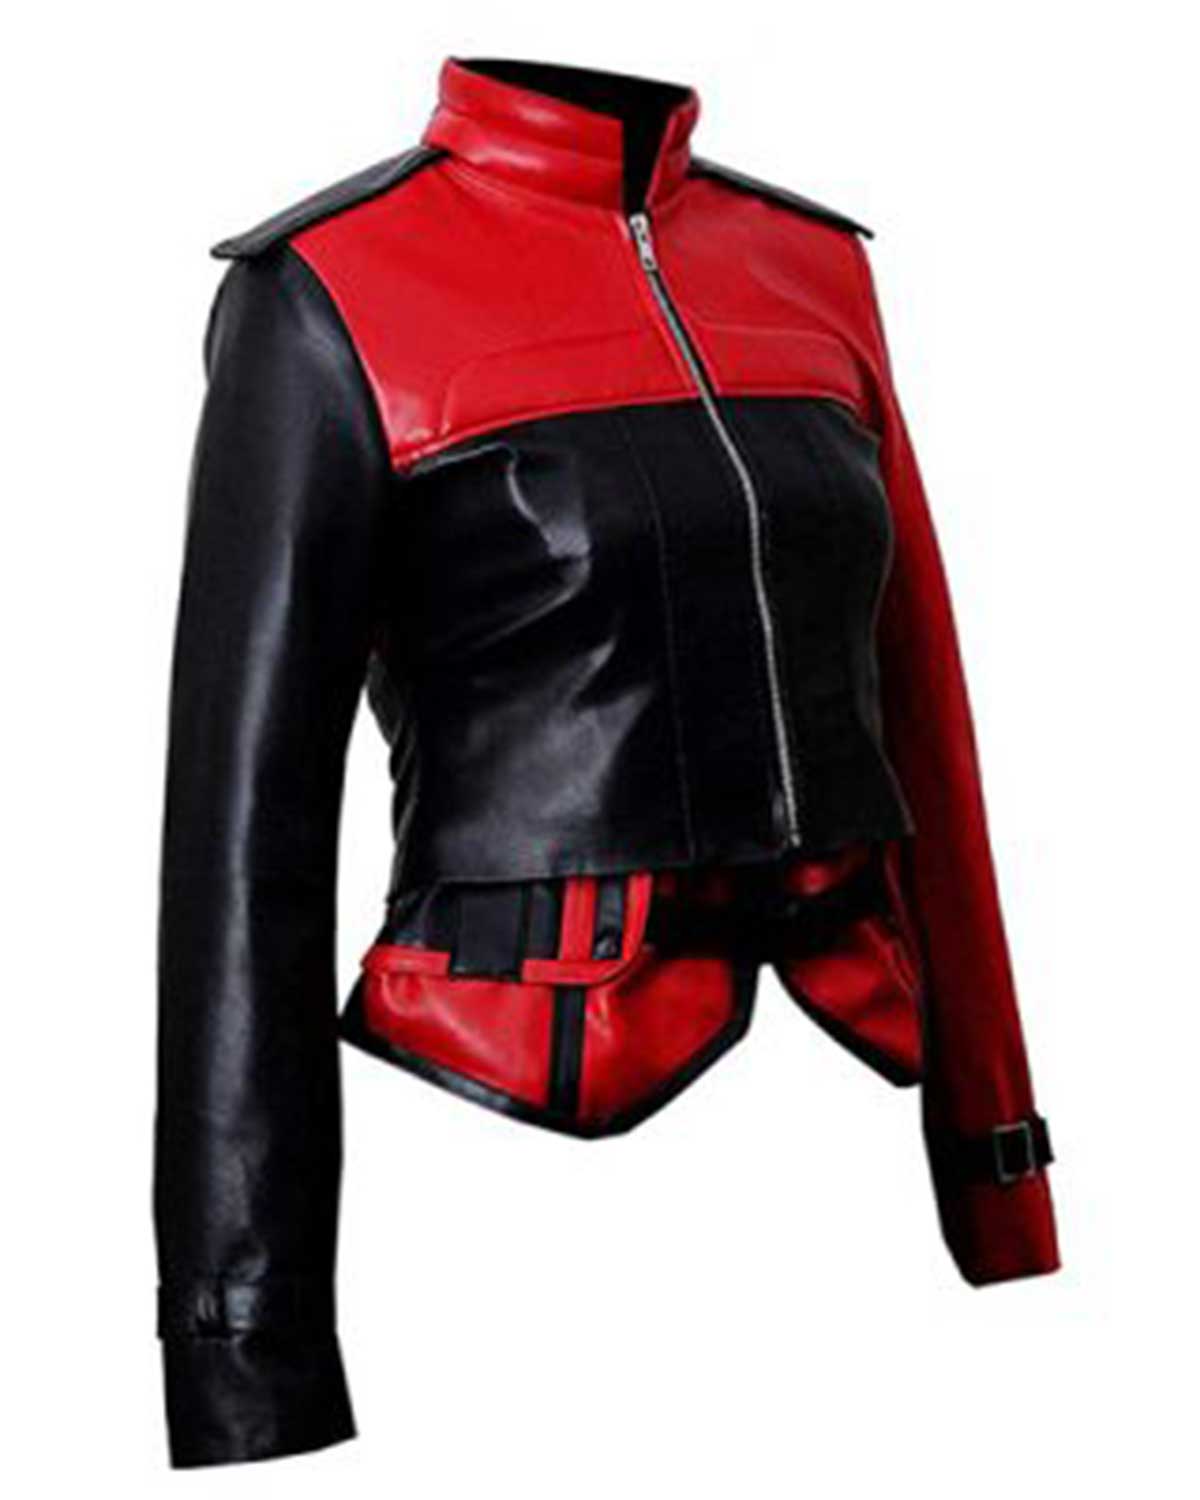 Elite Injustice 2 Video Game Harley Quinn Halloween Leather Jacket